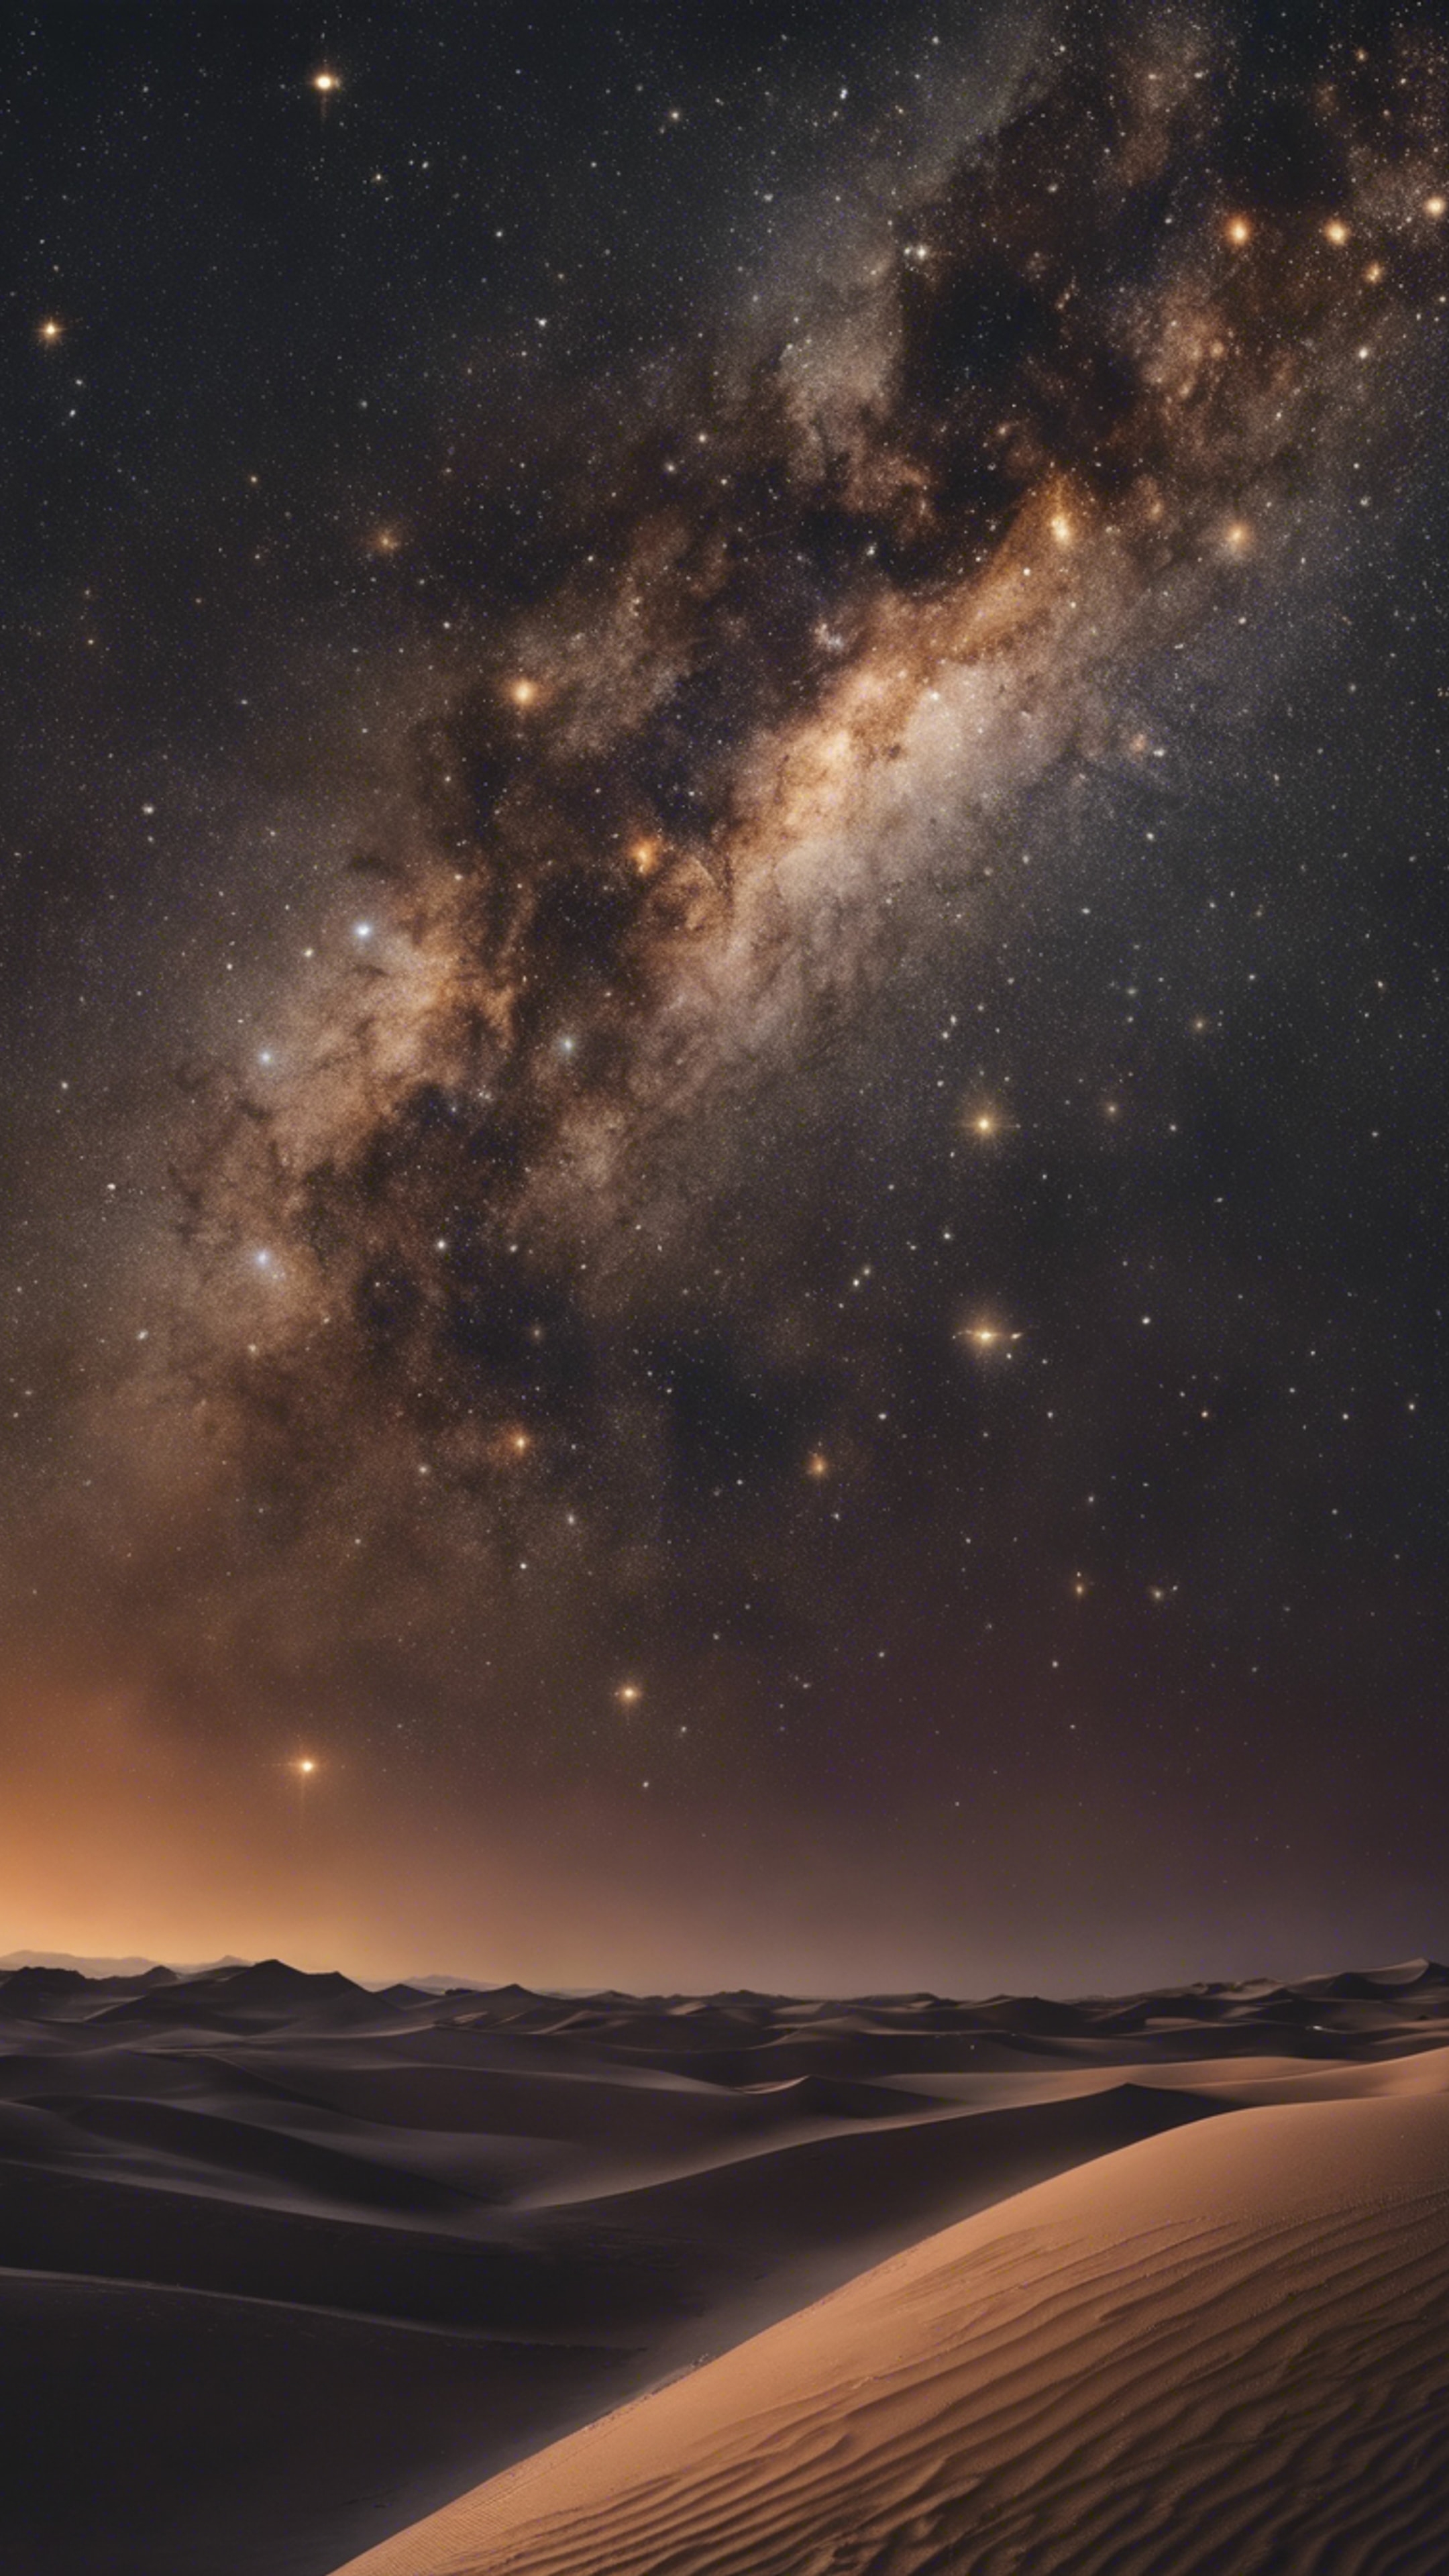 An night sky filled with billions of stars, captured from a serene desert.壁紙[edba821eab3c43f88006]